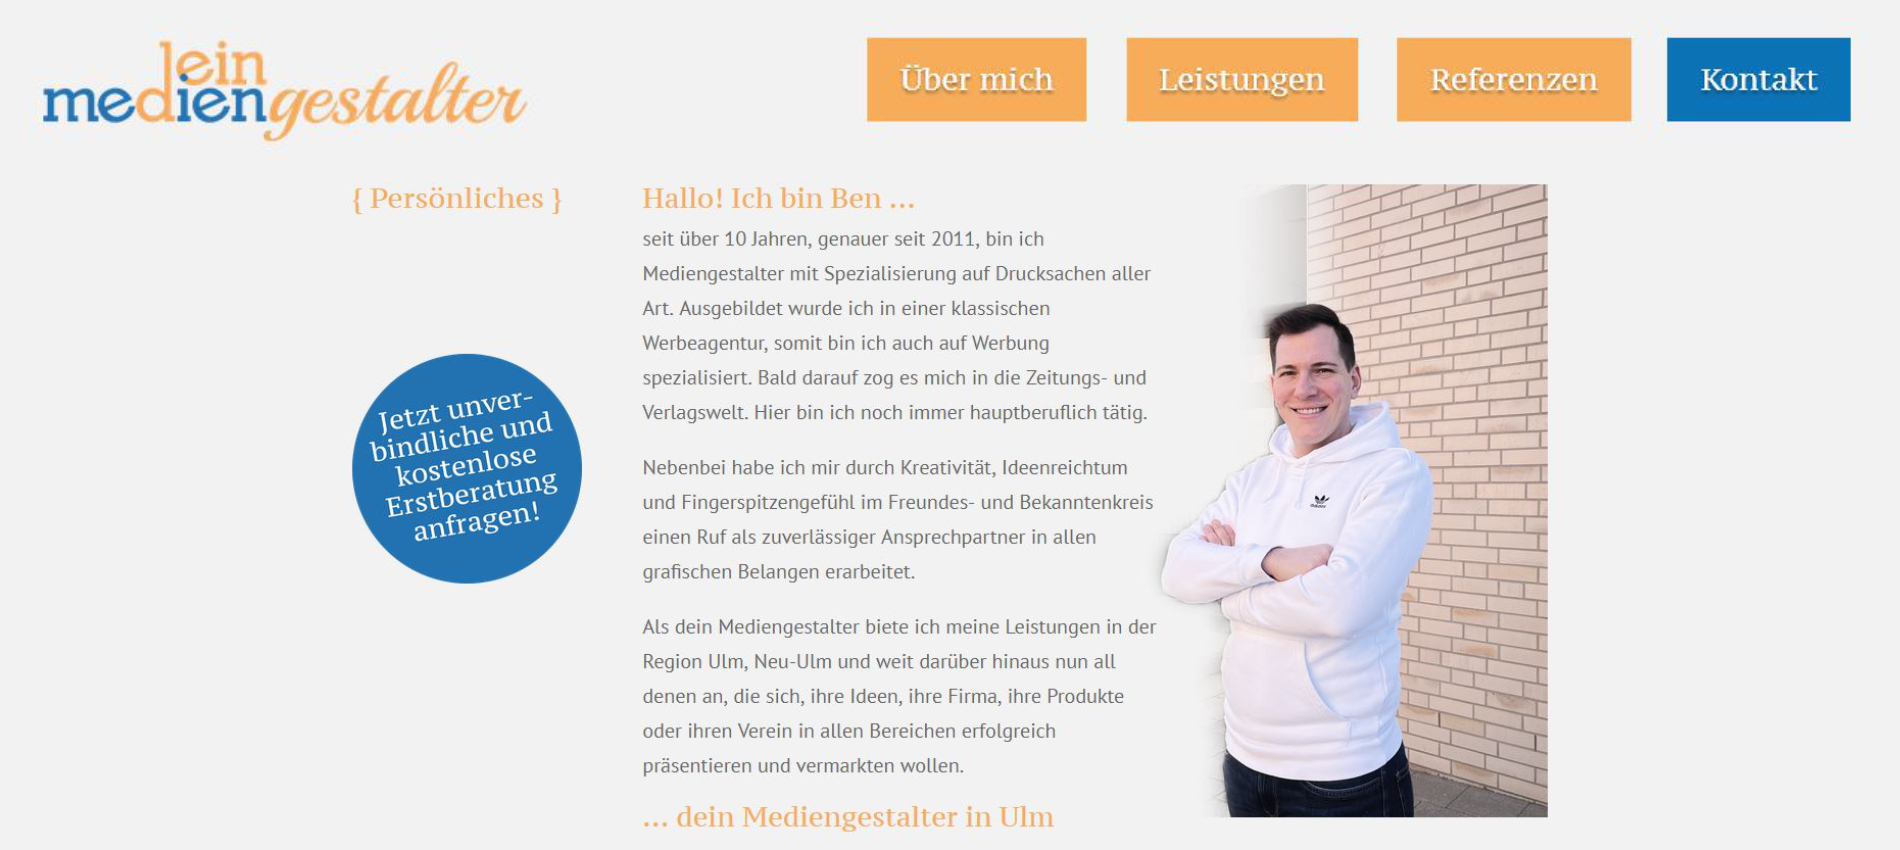 Referenz-Website www.dein-mediengestalter.de